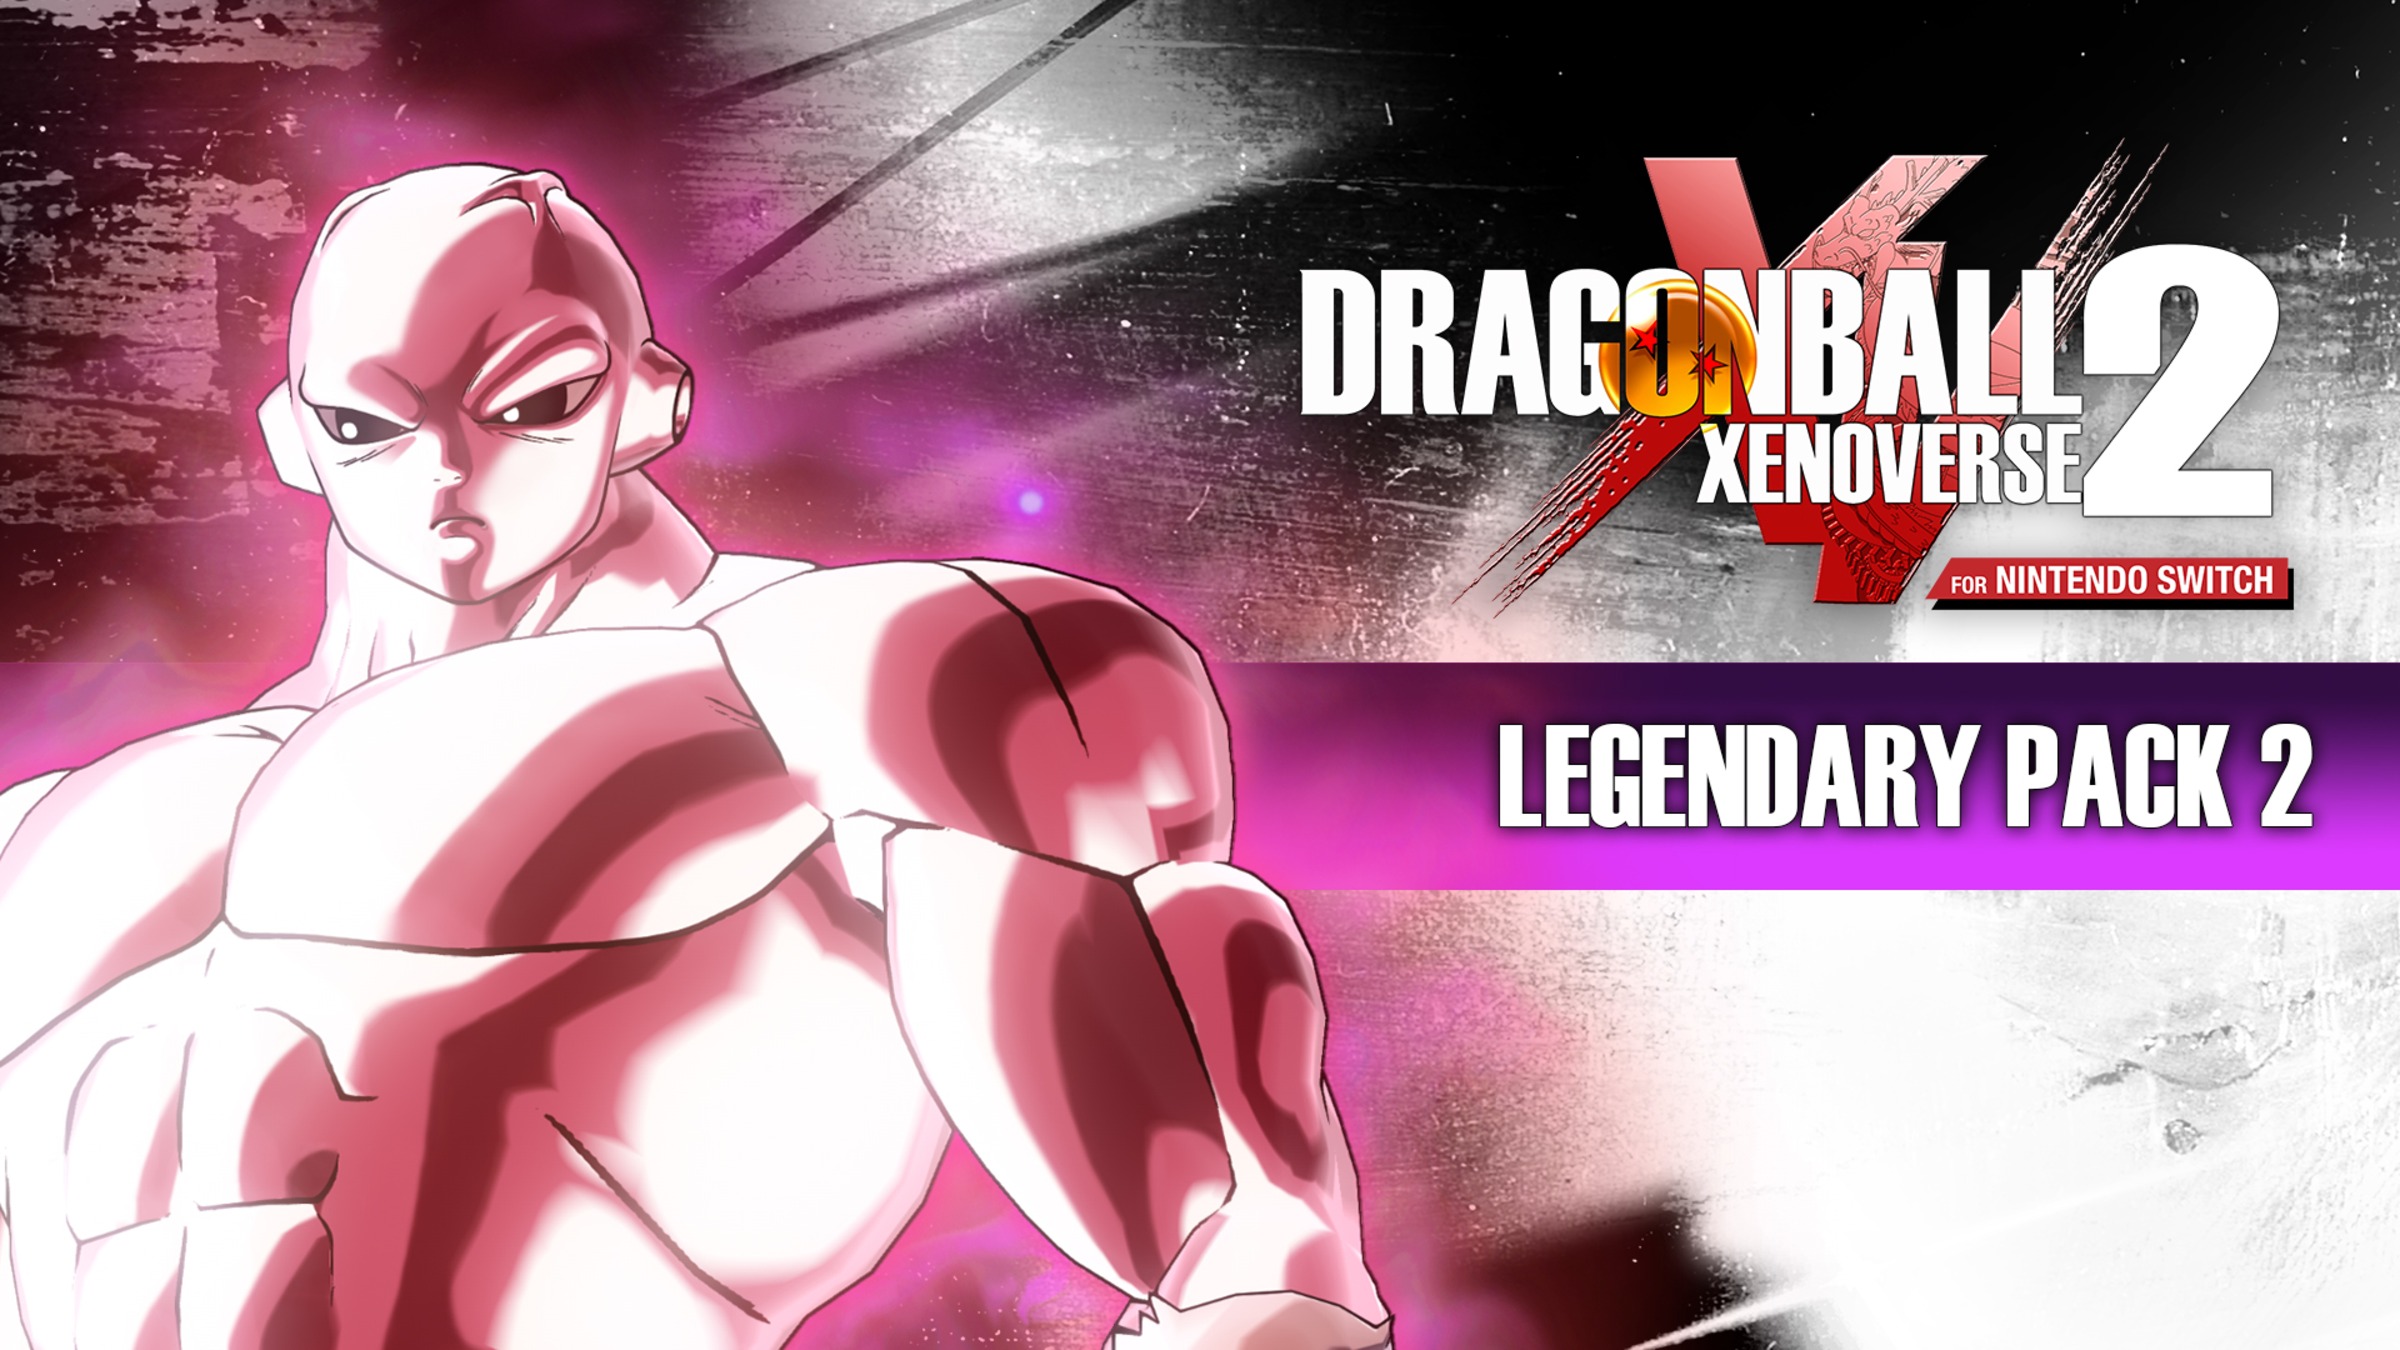 Buy DRAGON BALL XENOVERSE 2 - Legendary Pack Set